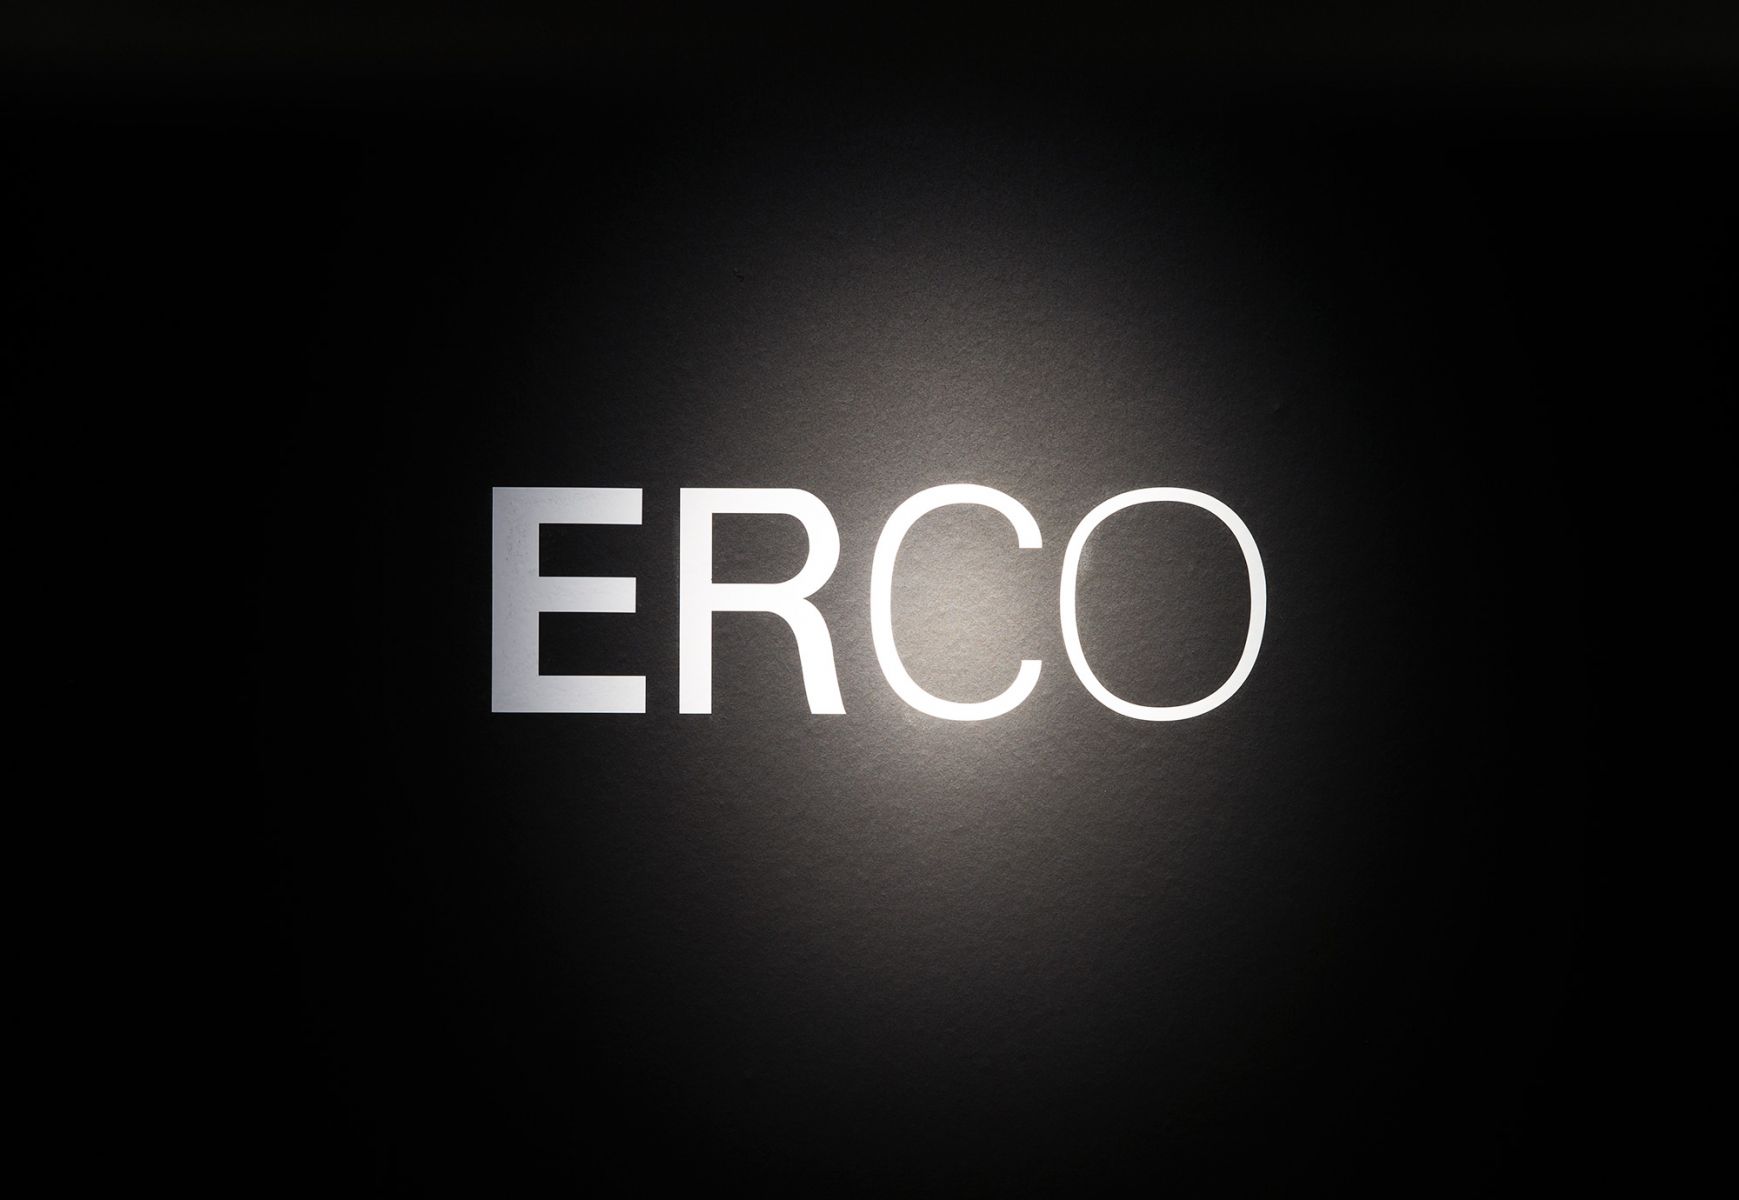 Erco - EuroShop